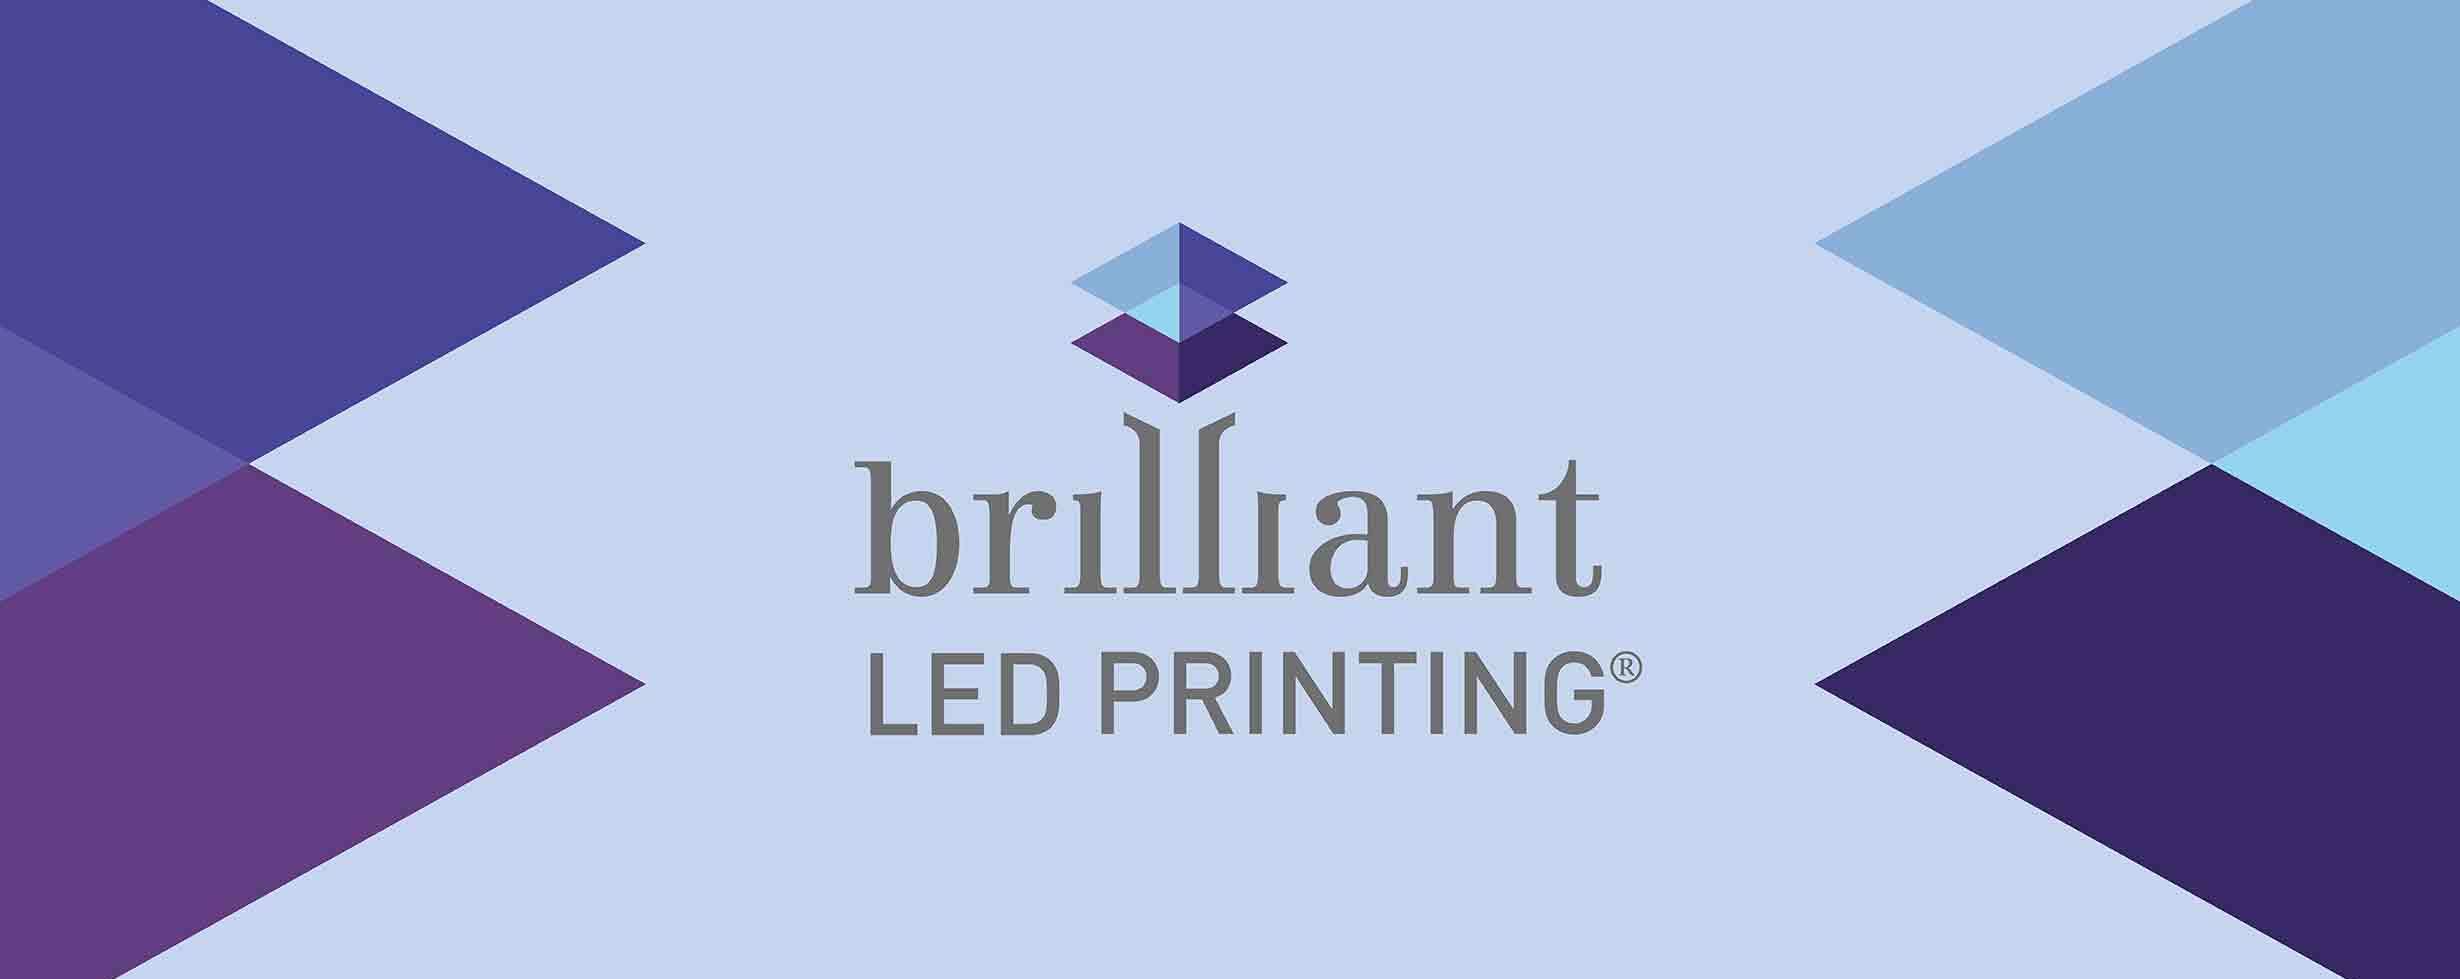 Brilliant LED Printing, verbesserte Drucktechnologie